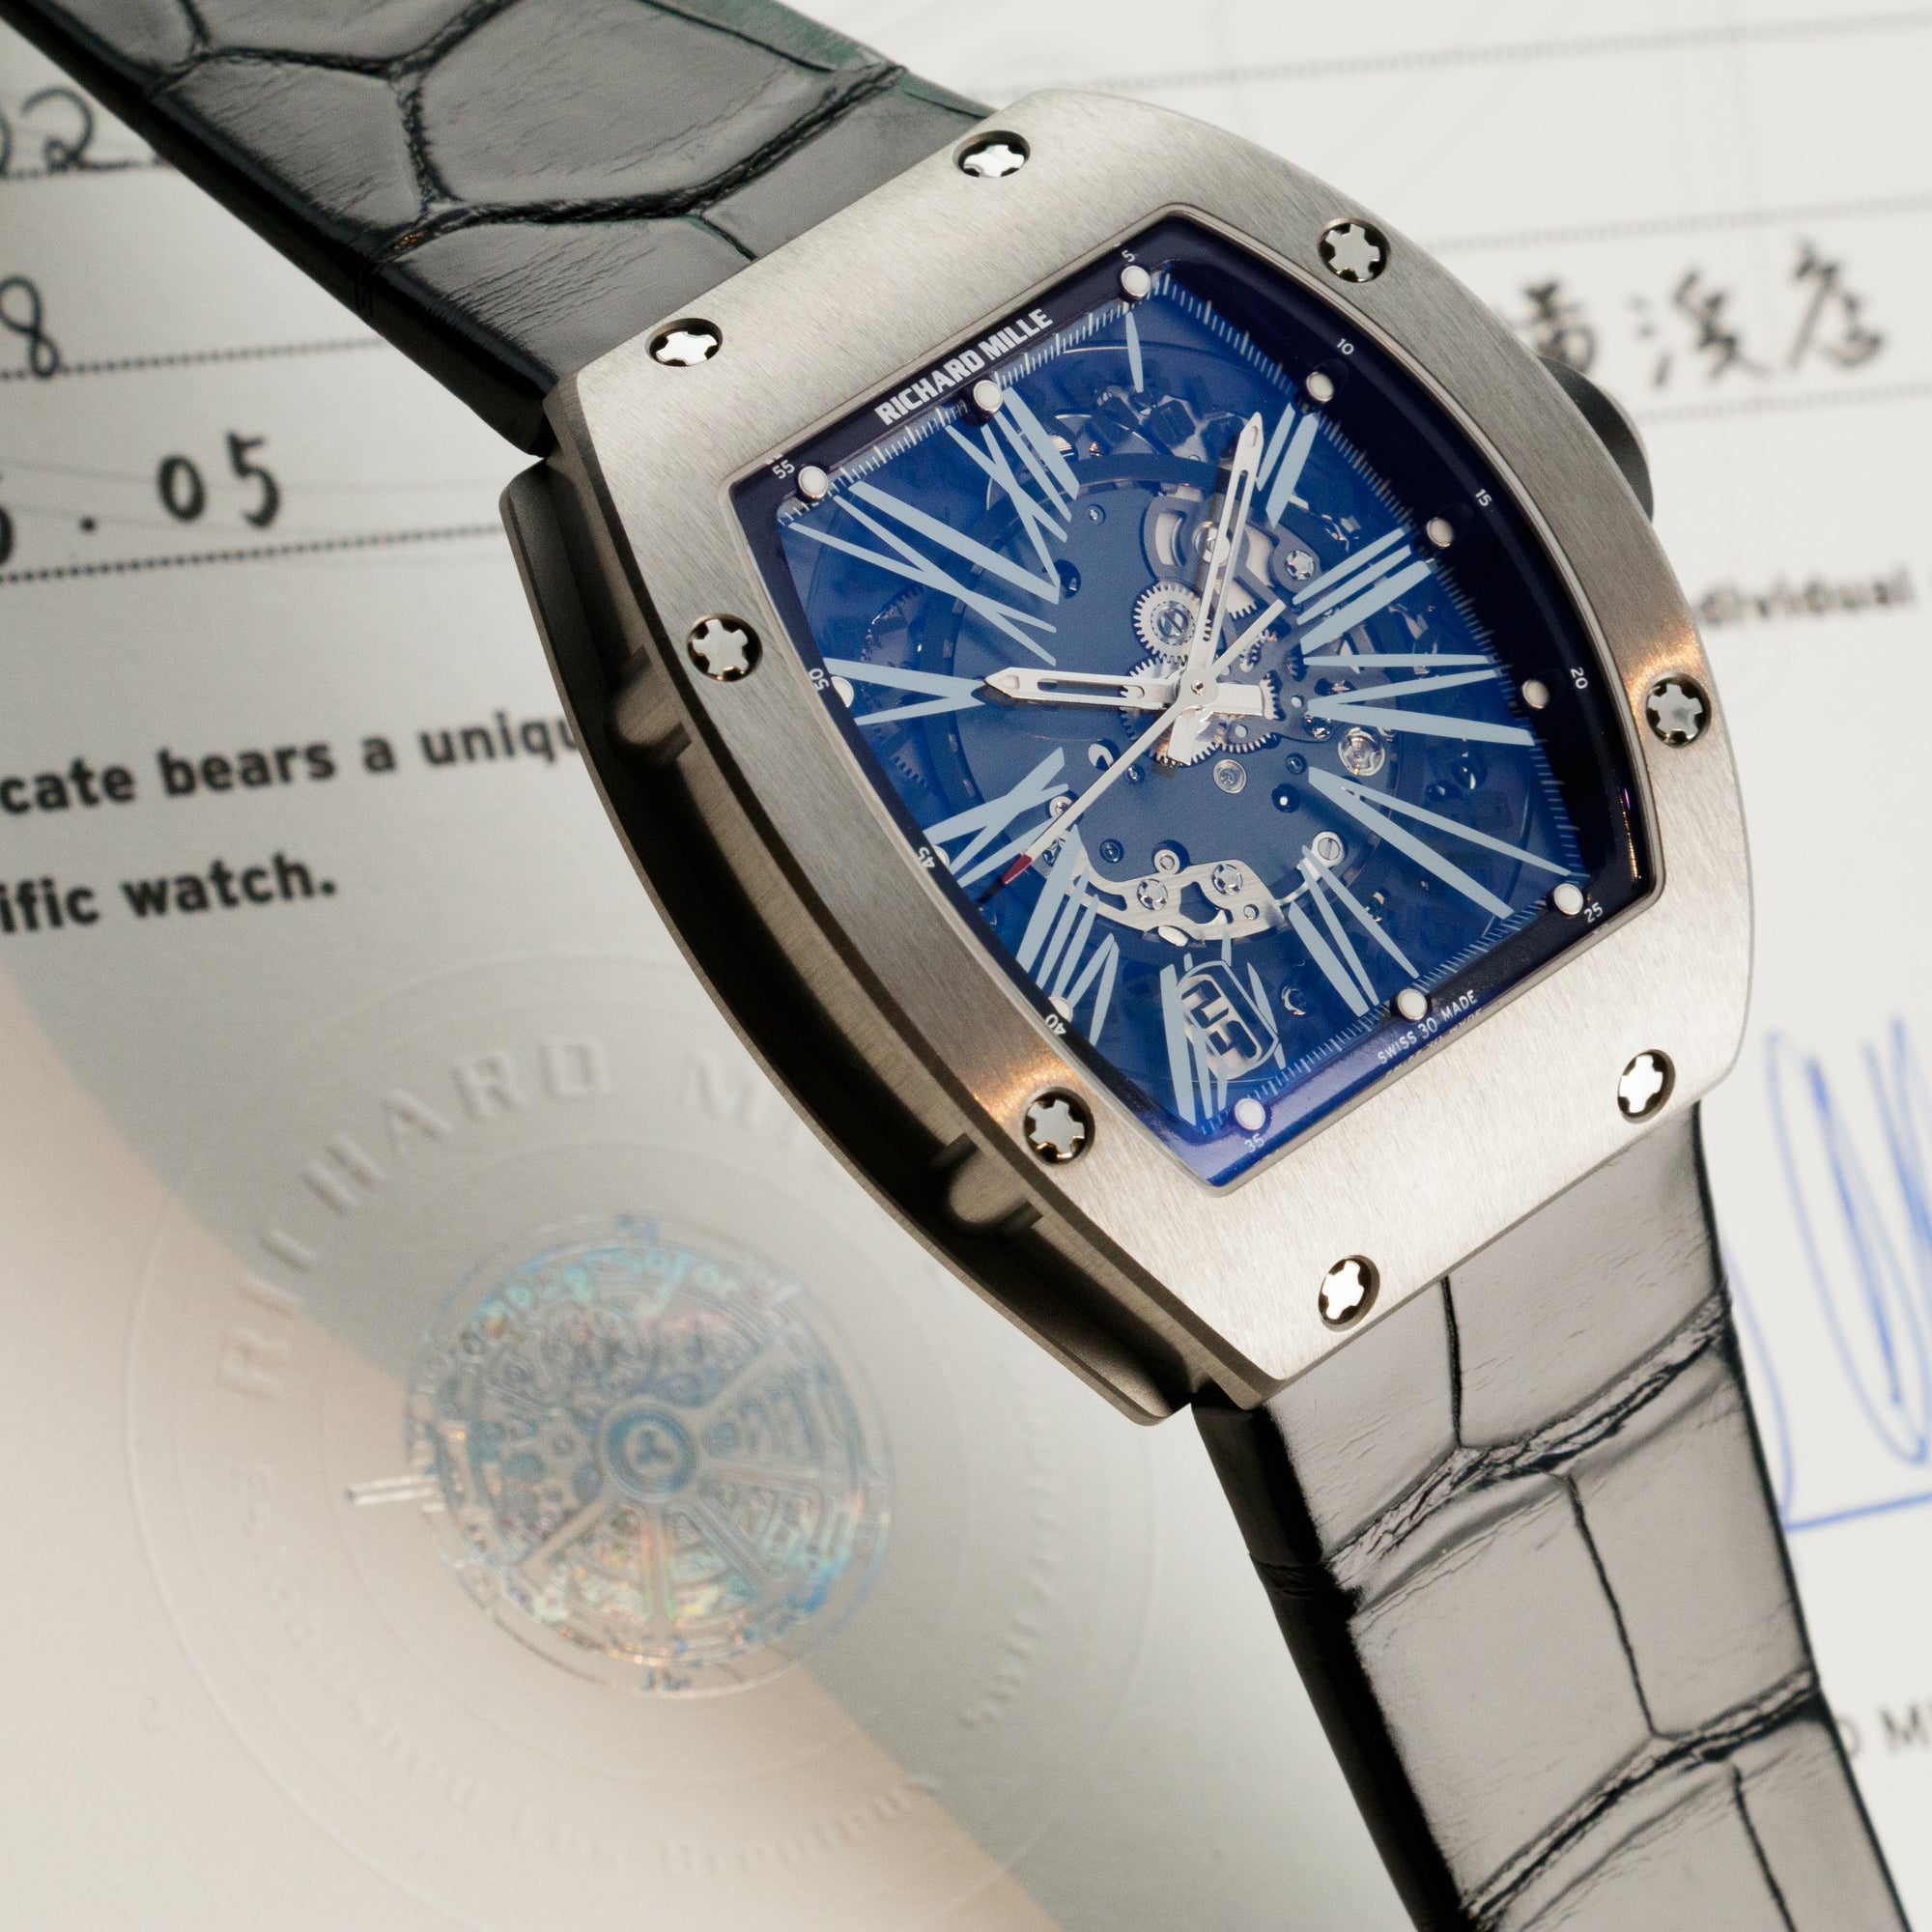 Richard Mille - Richard Mille Automatic RM 023 Titanium - The Keystone Watches